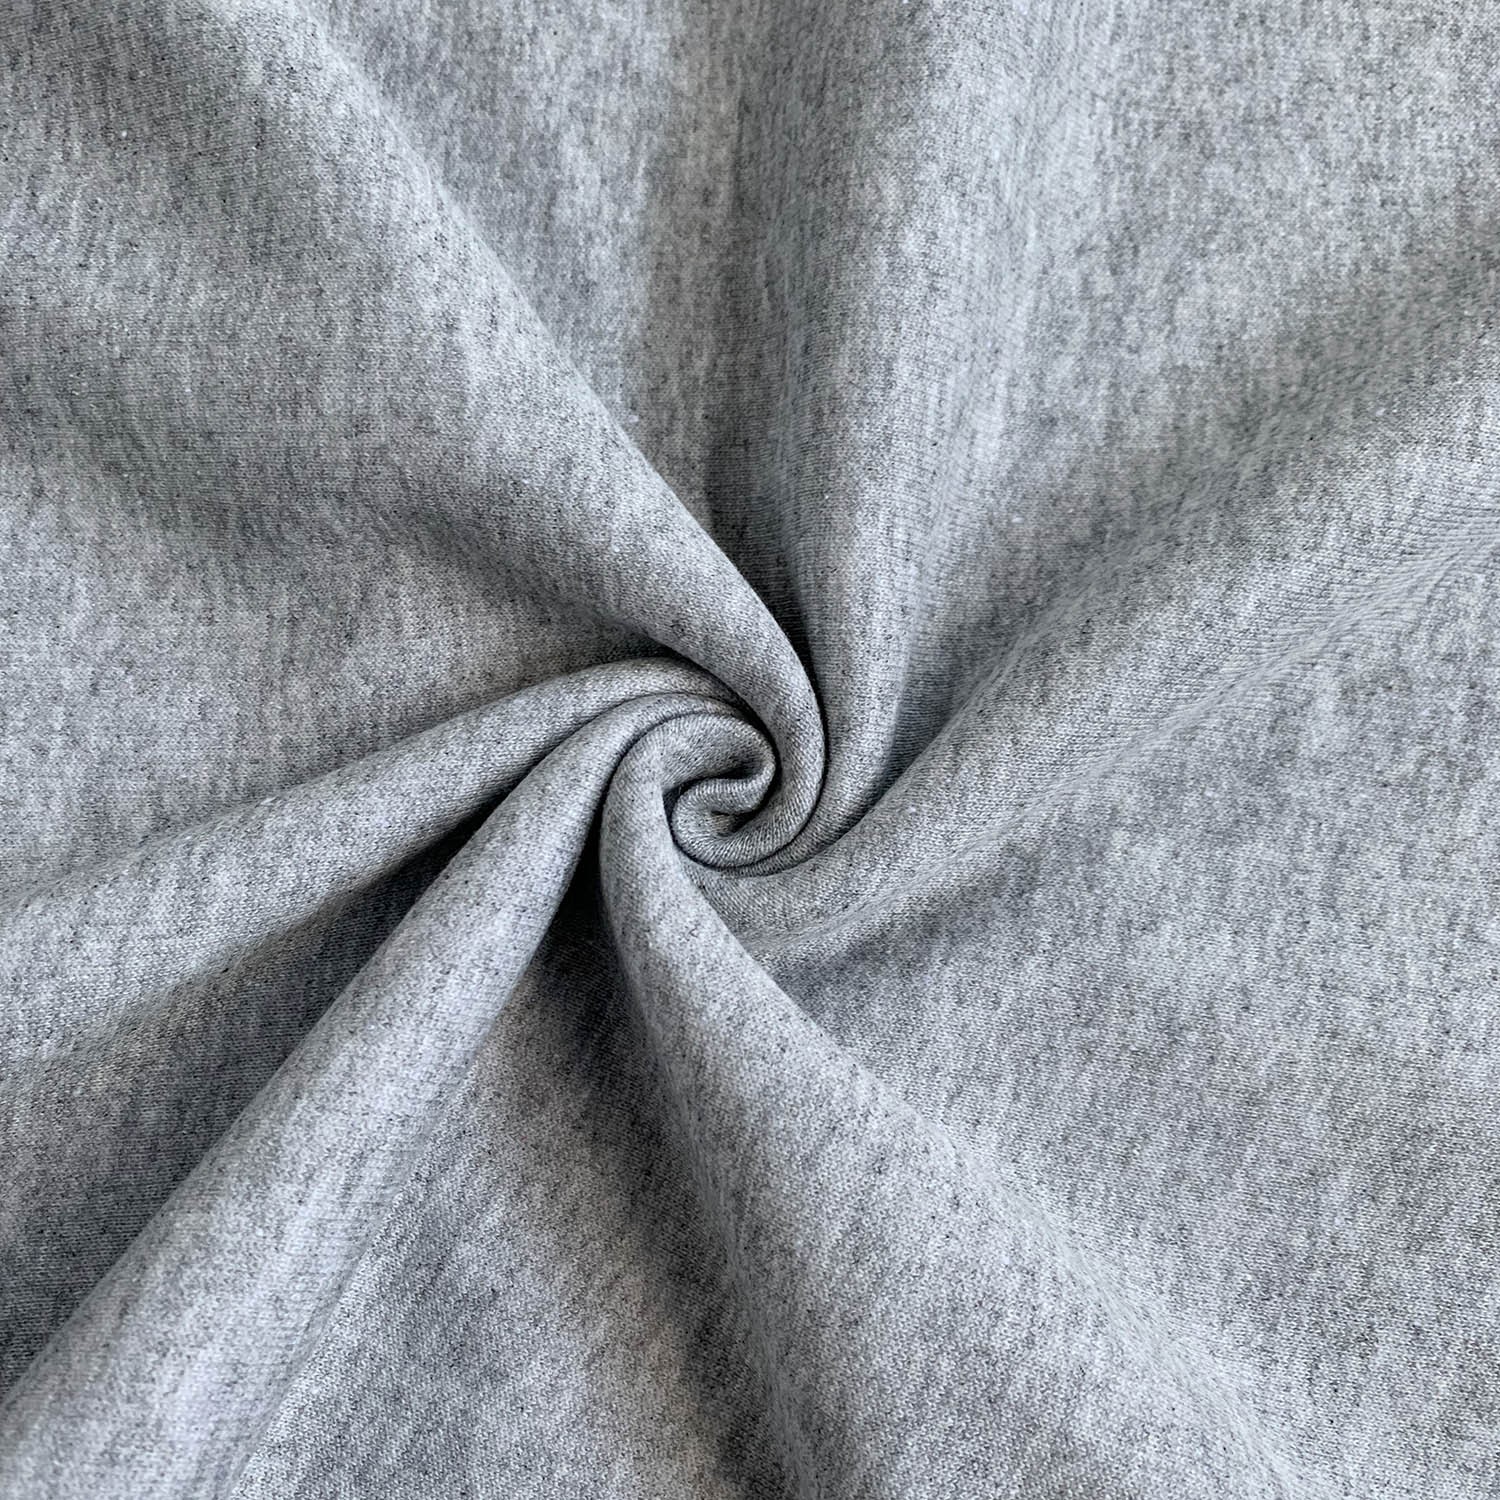 Hoodie Fleece Fabric - EU Fabrics